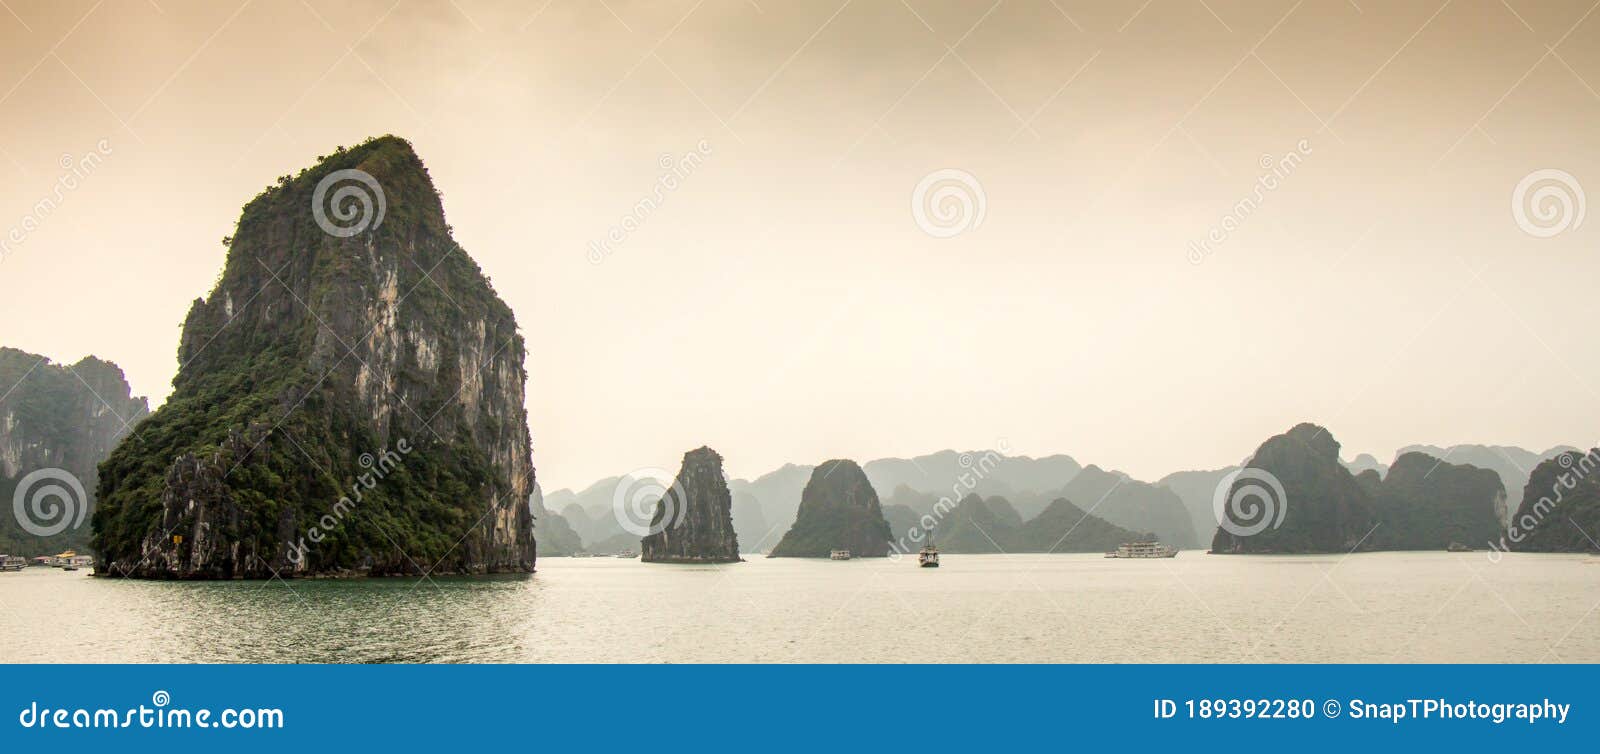 limestone karst islands in ha long bay, vietnam